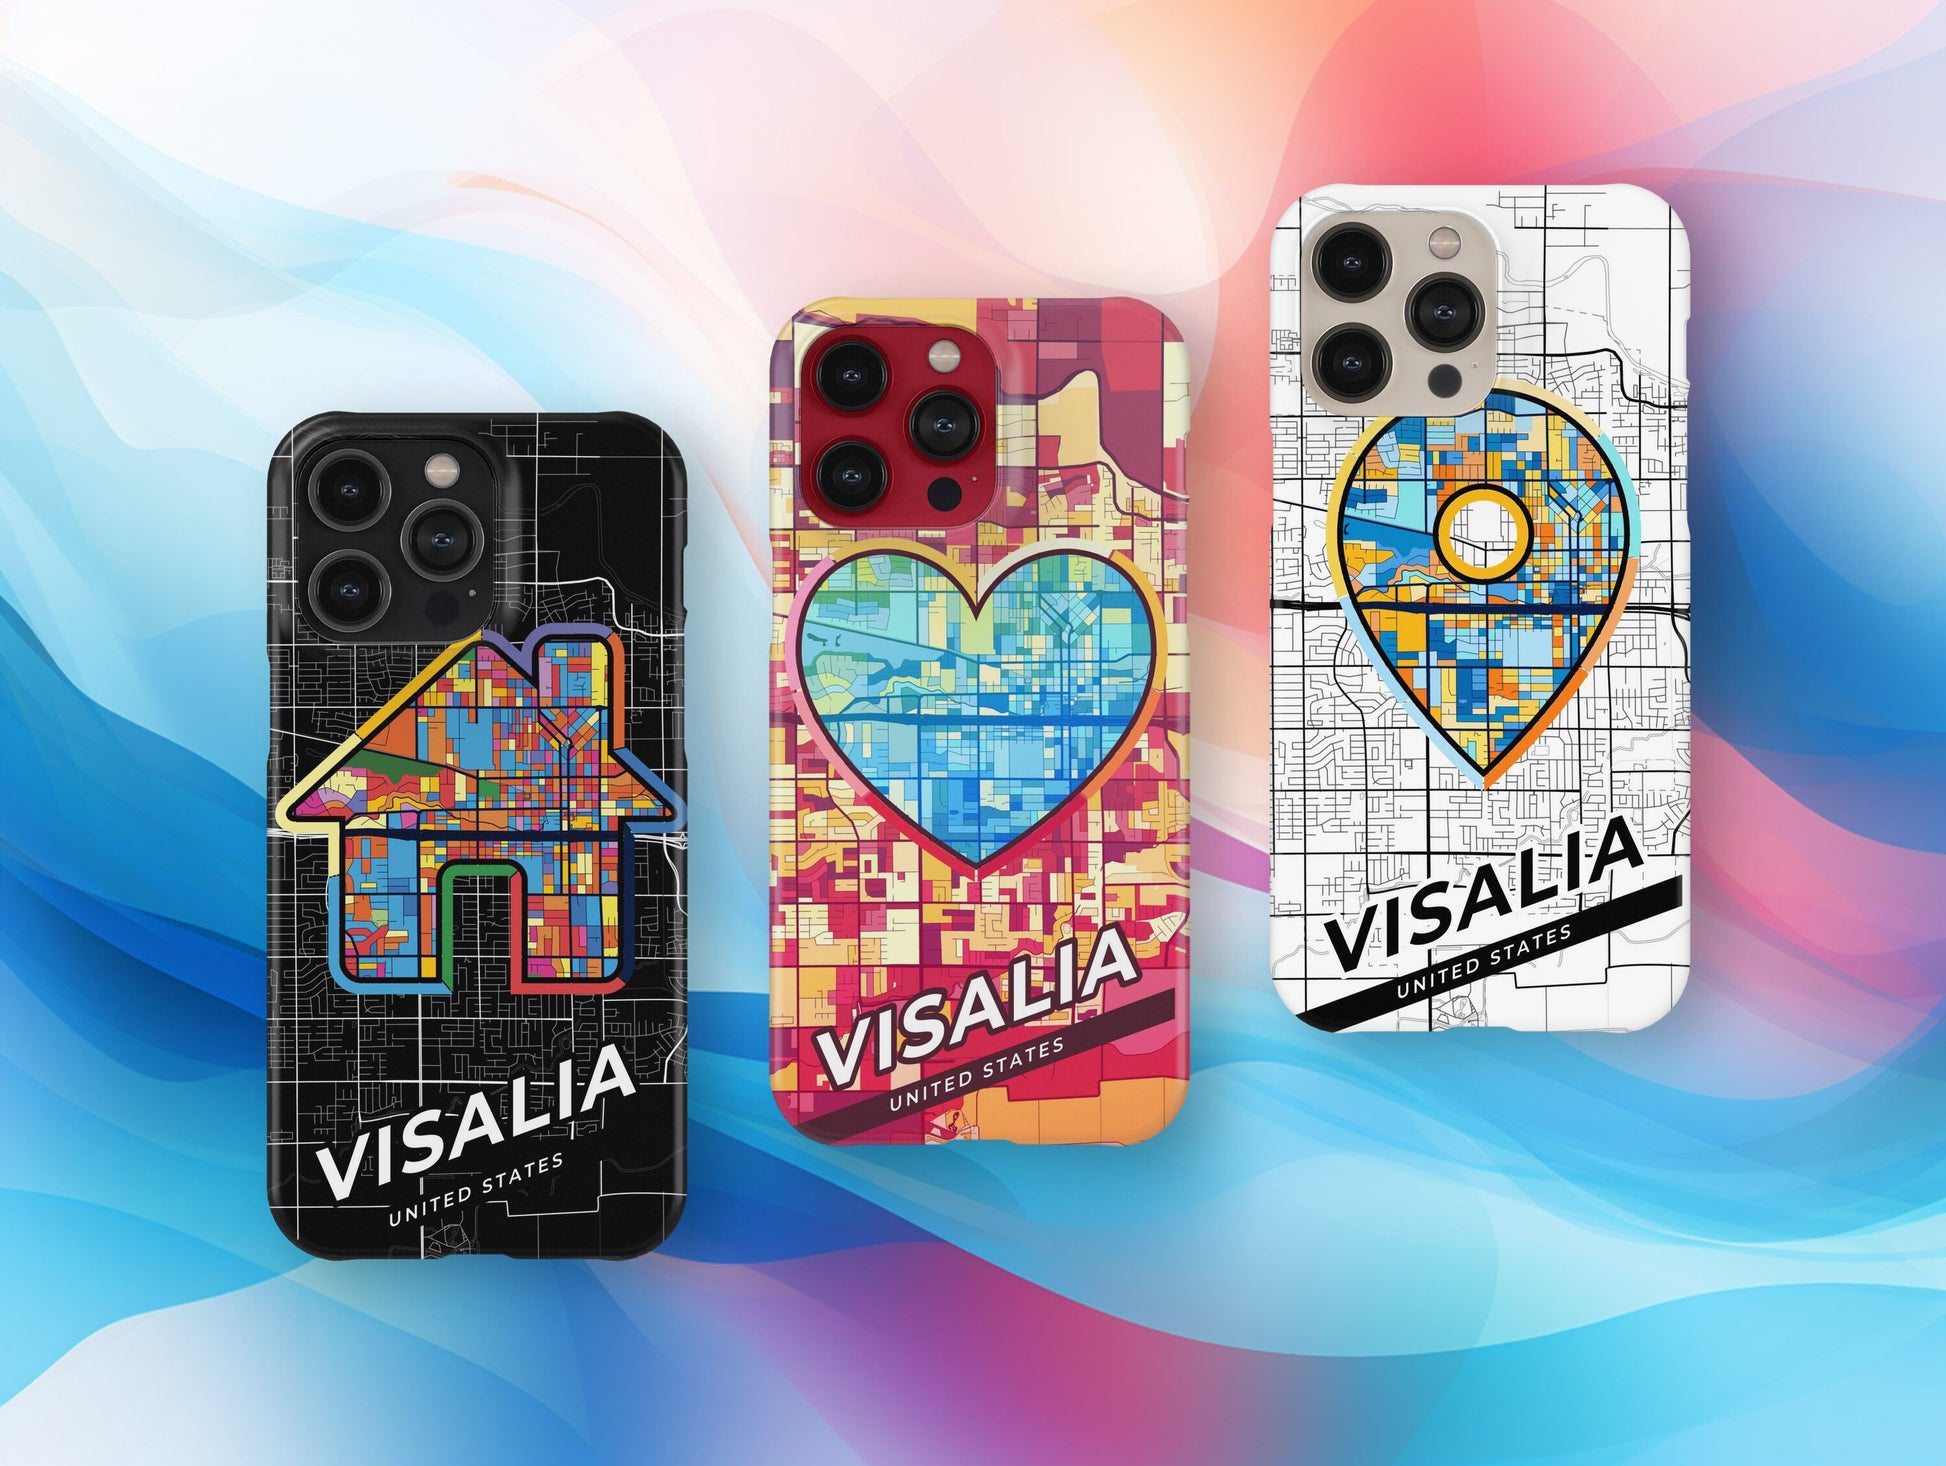 Visalia California slim phone case with colorful icon